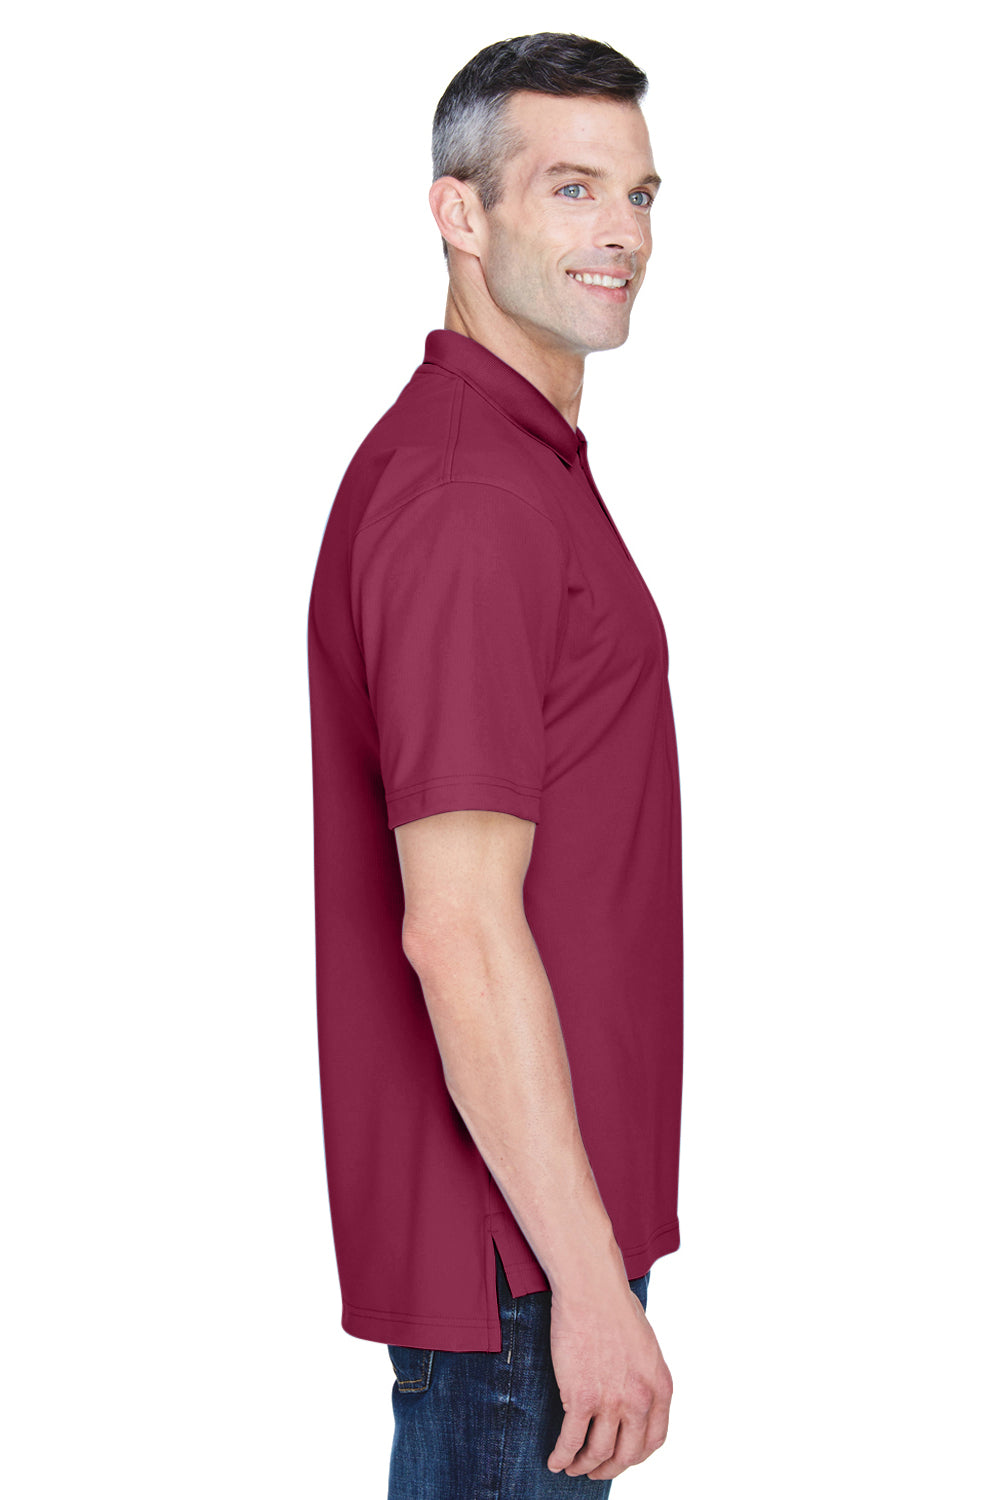 UltraClub 8445 Mens Cool & Dry Performance Moisture Wicking Short Sleeve Polo Shirt Maroon Side